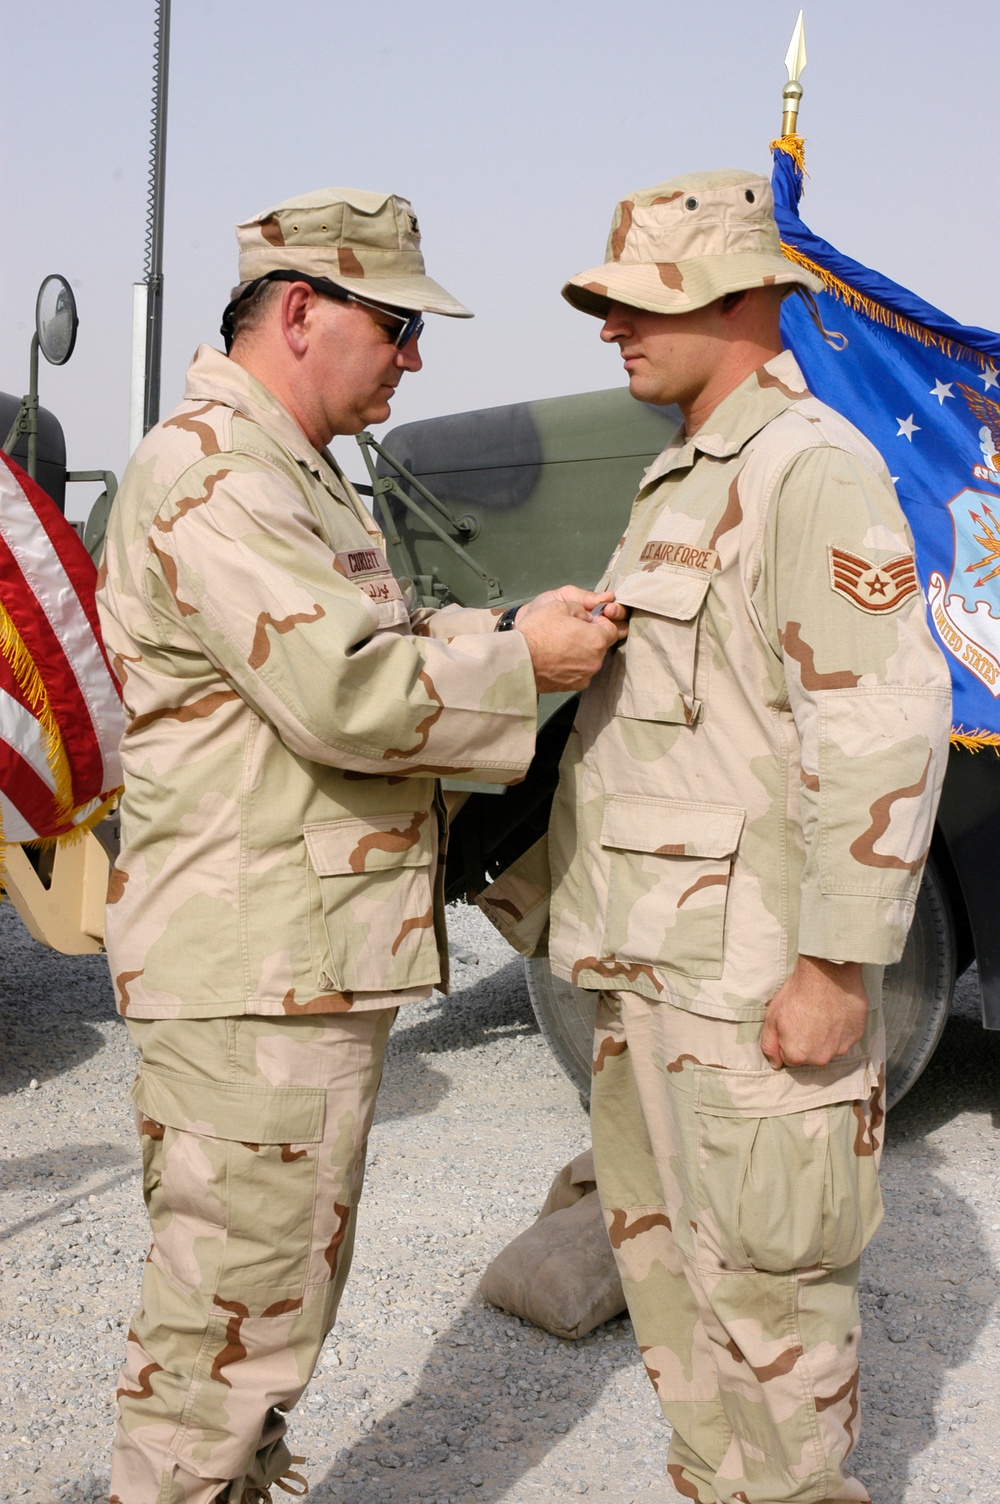 Airman presented Purple Heart for military merit